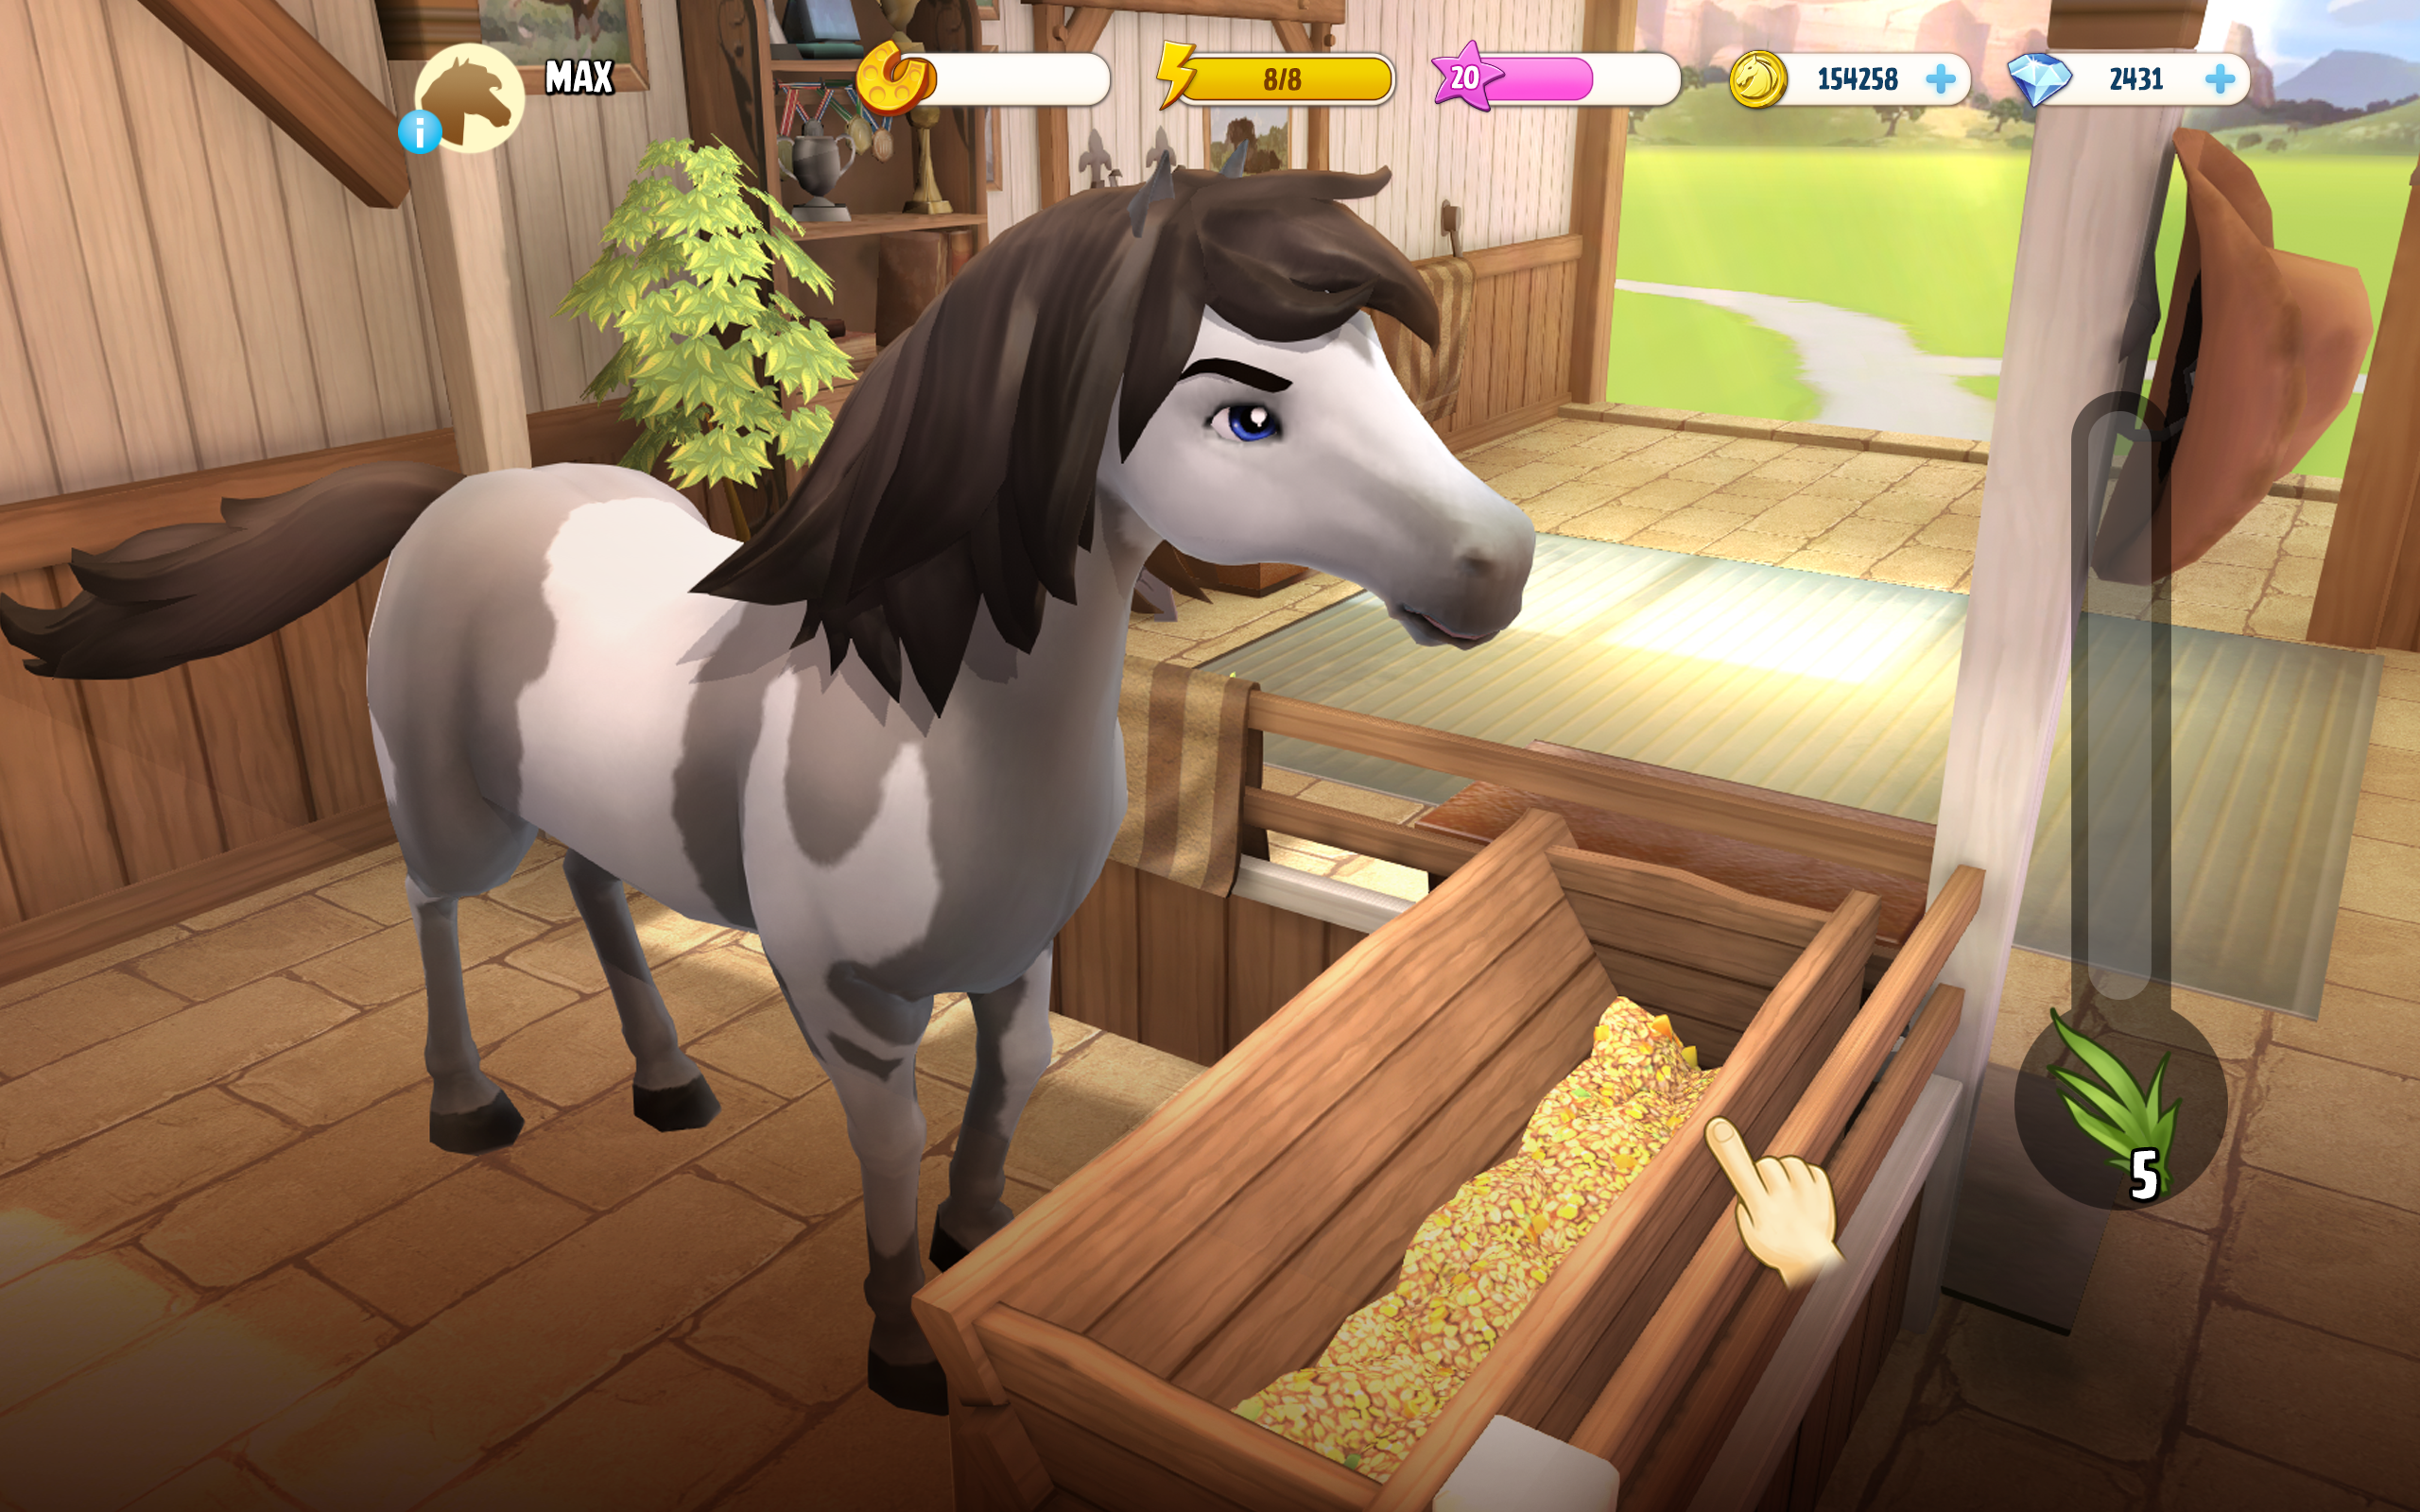 Baixar & Jogar Horse Haven World Adventures no PC & Mac (Emulador)